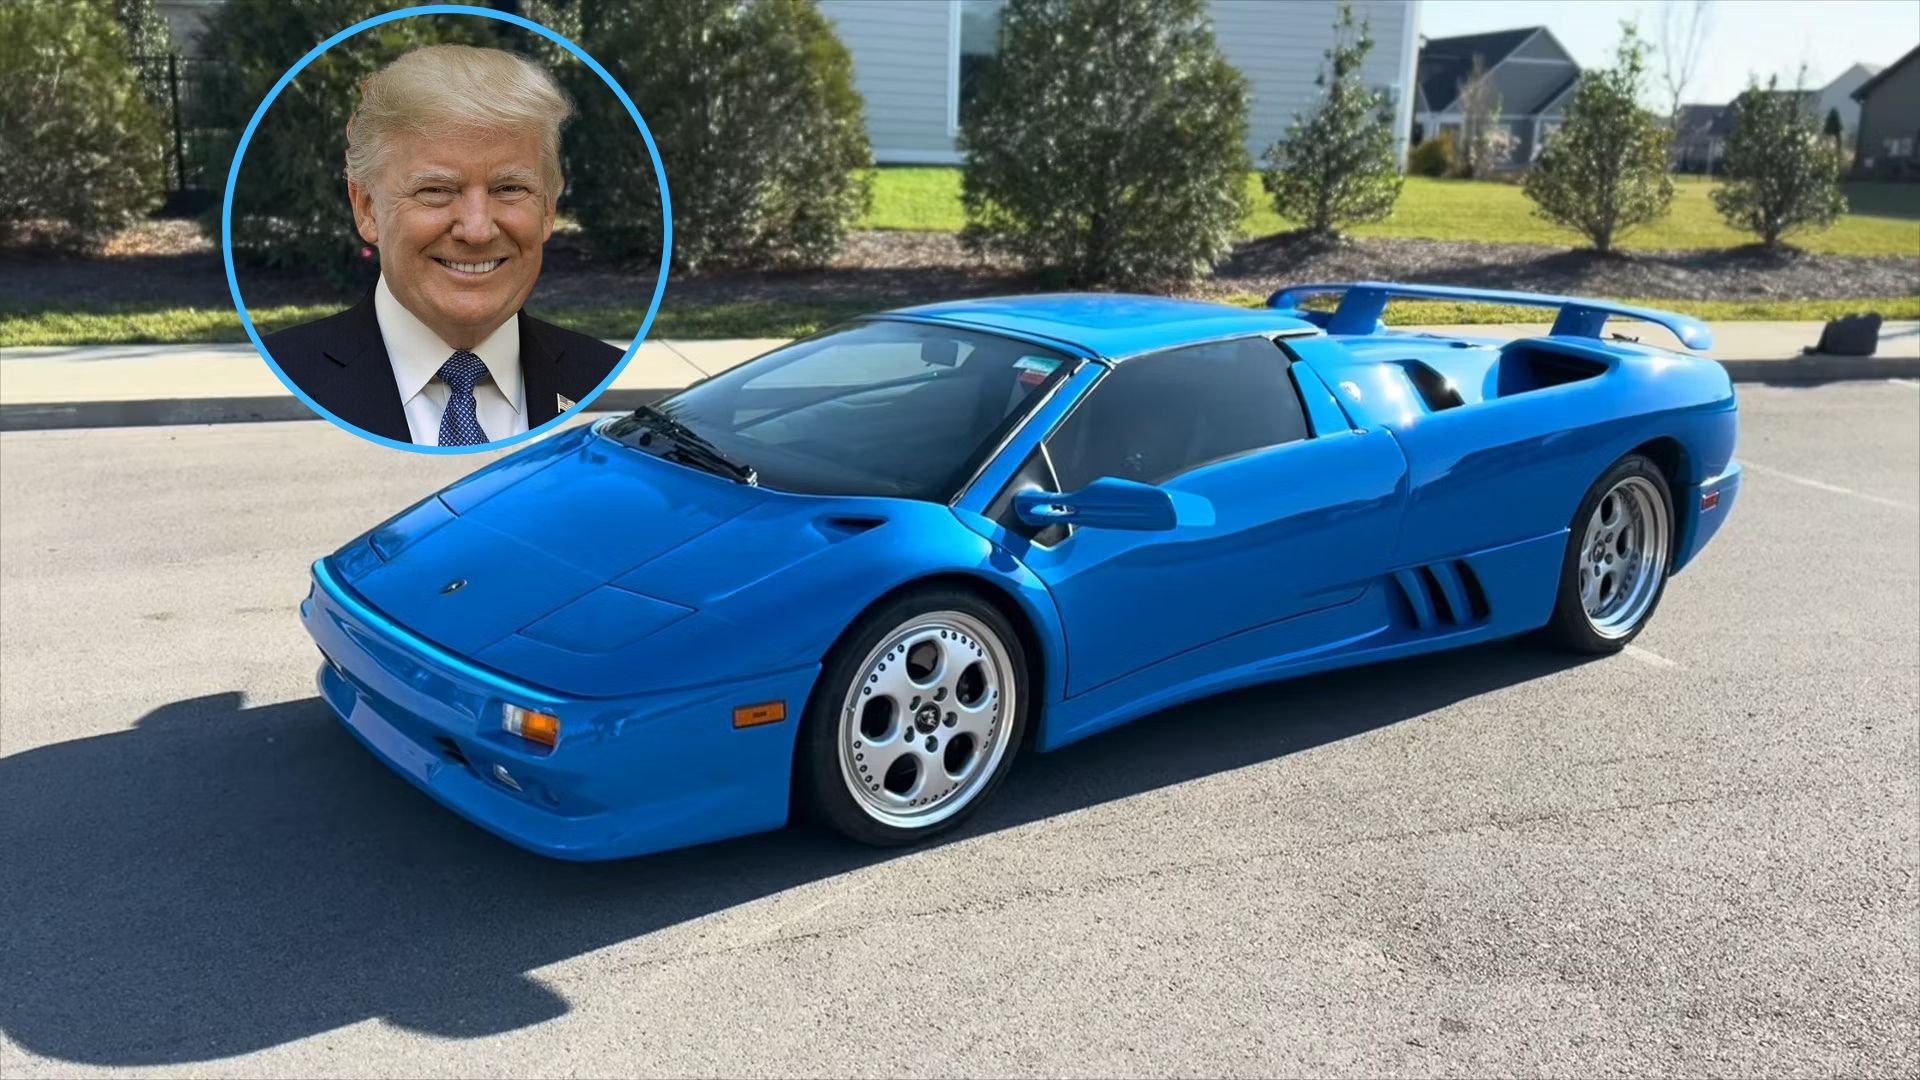 1997 Lamborghini Diablo VT Roadster owned by Donald Trump